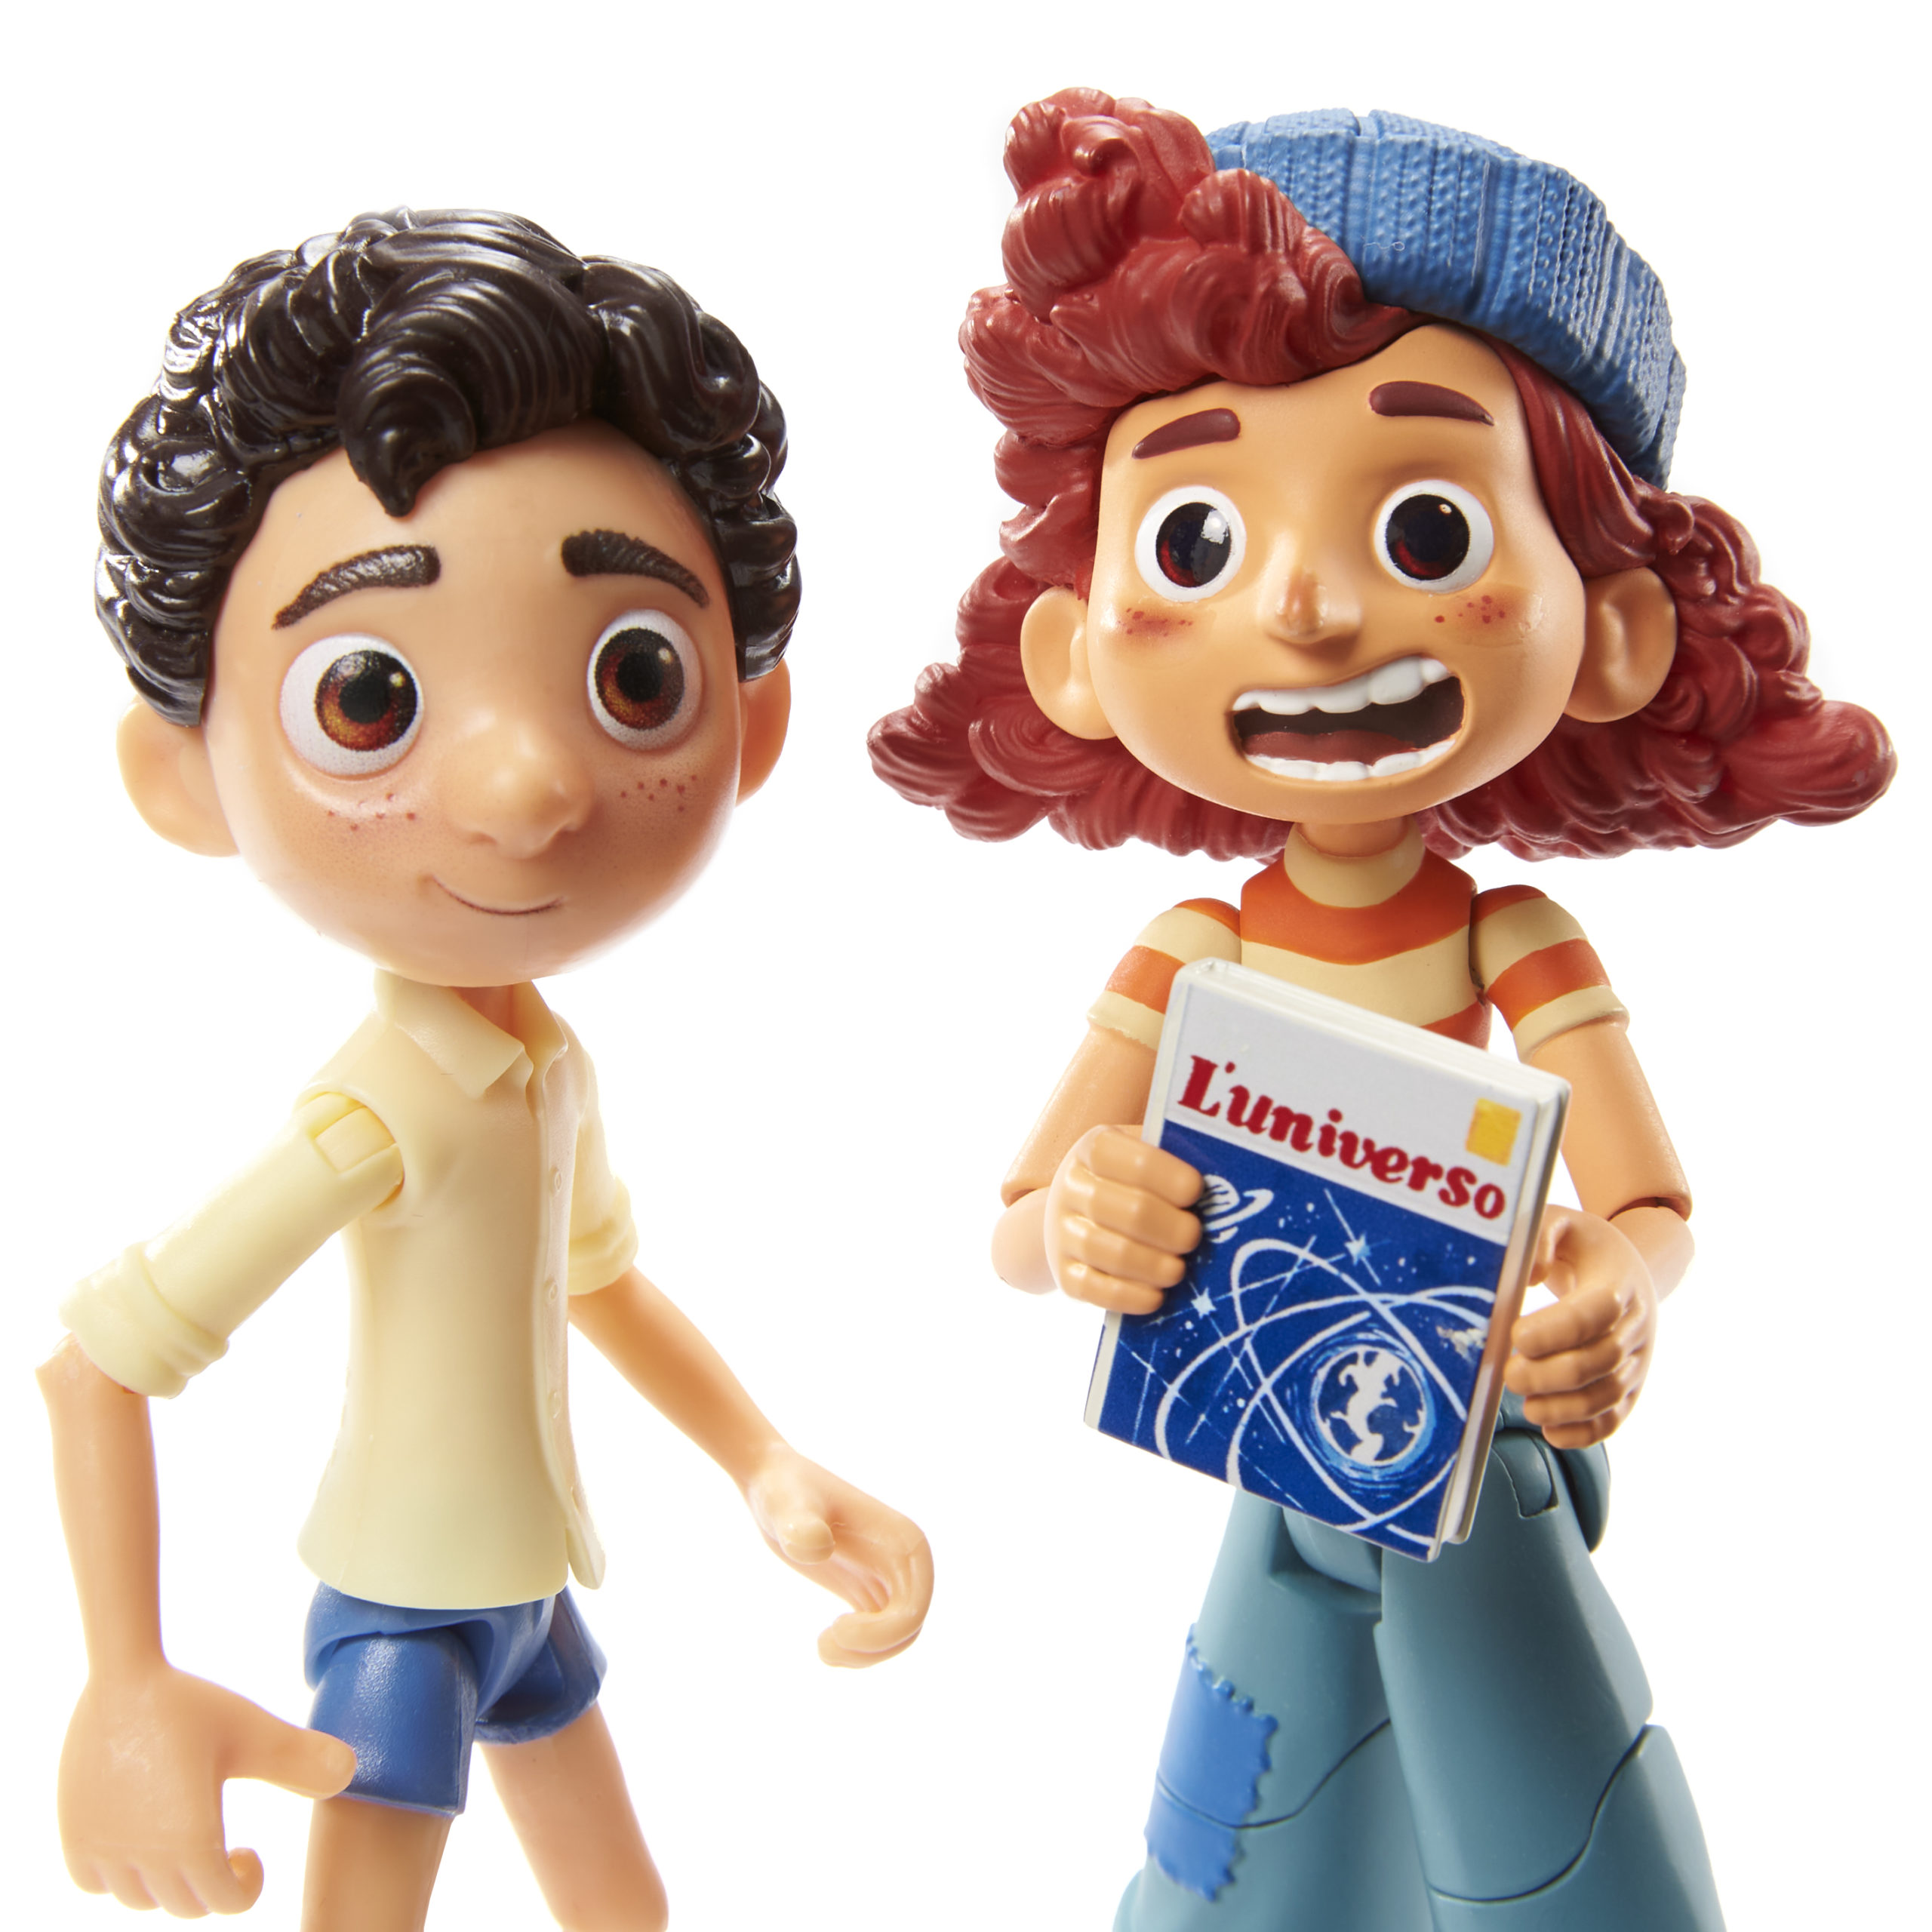 Mattel launches Disney Pixar Luca toy line